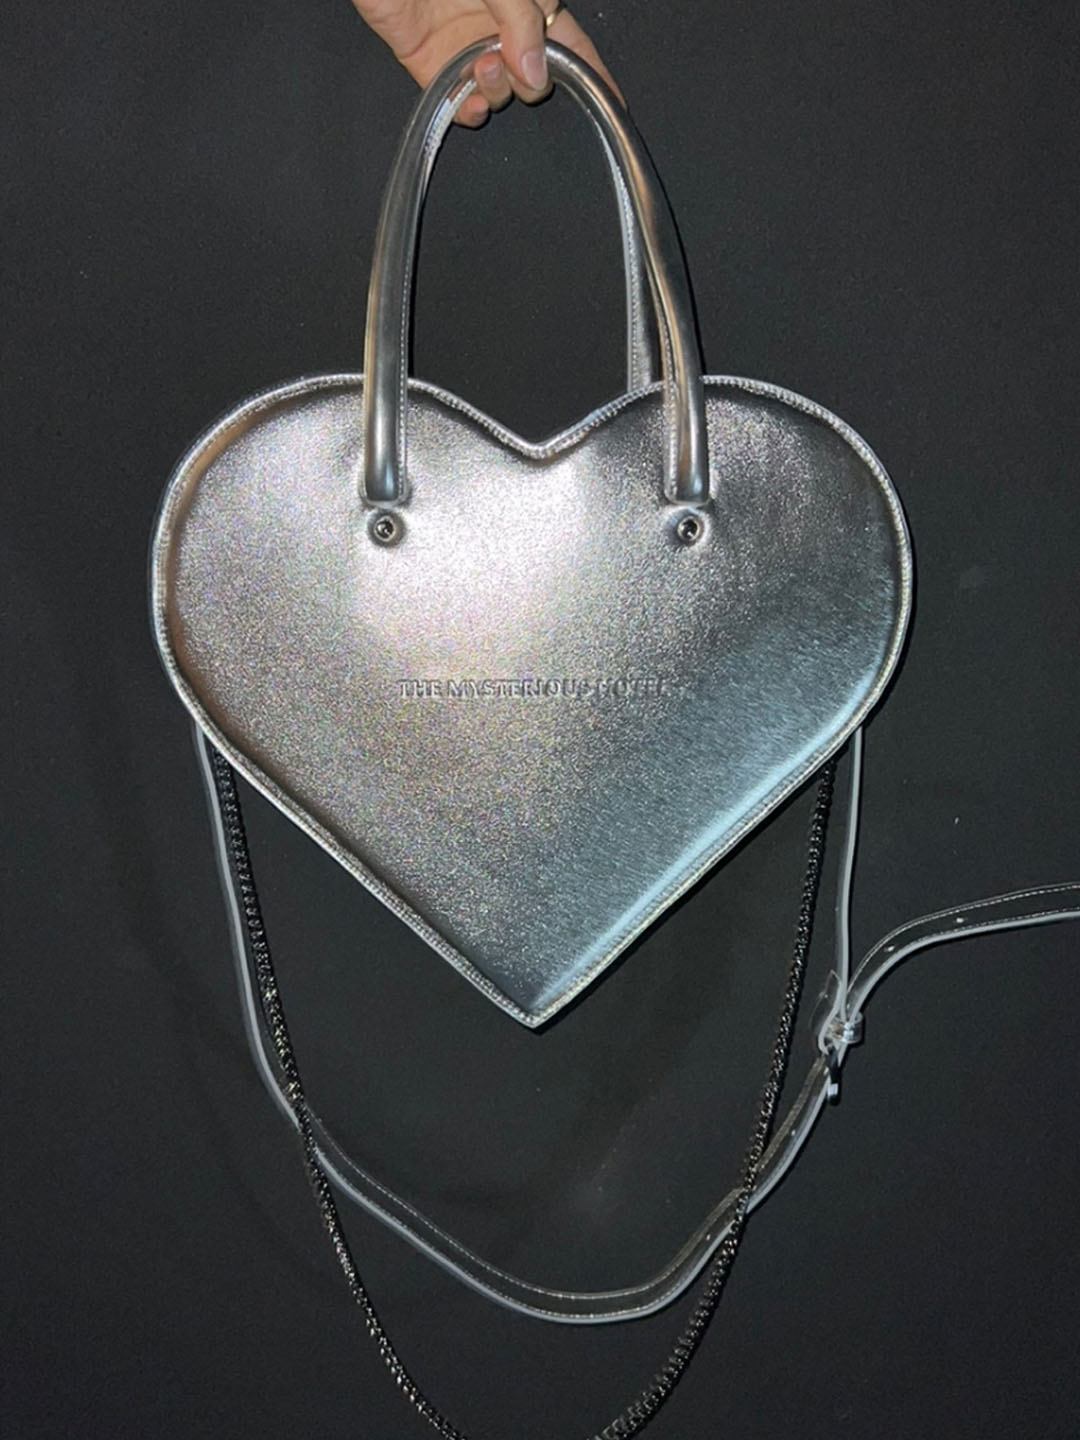 2nd) GIANT HEART CHAIN BAG